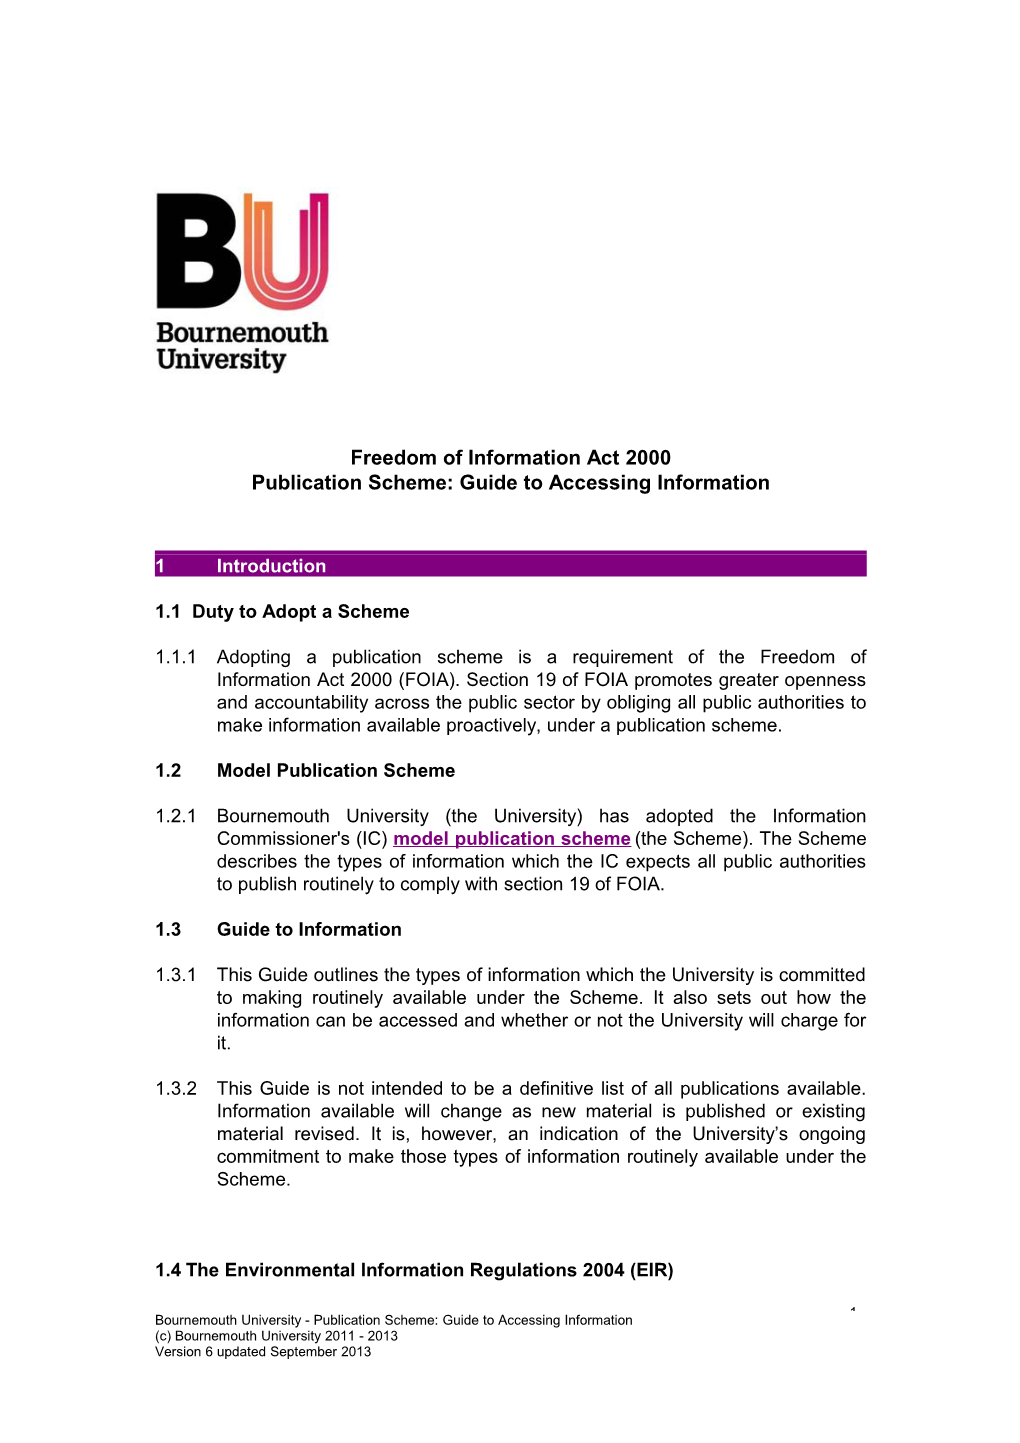 BU Publication Scheme Guide to Accessing Information V6